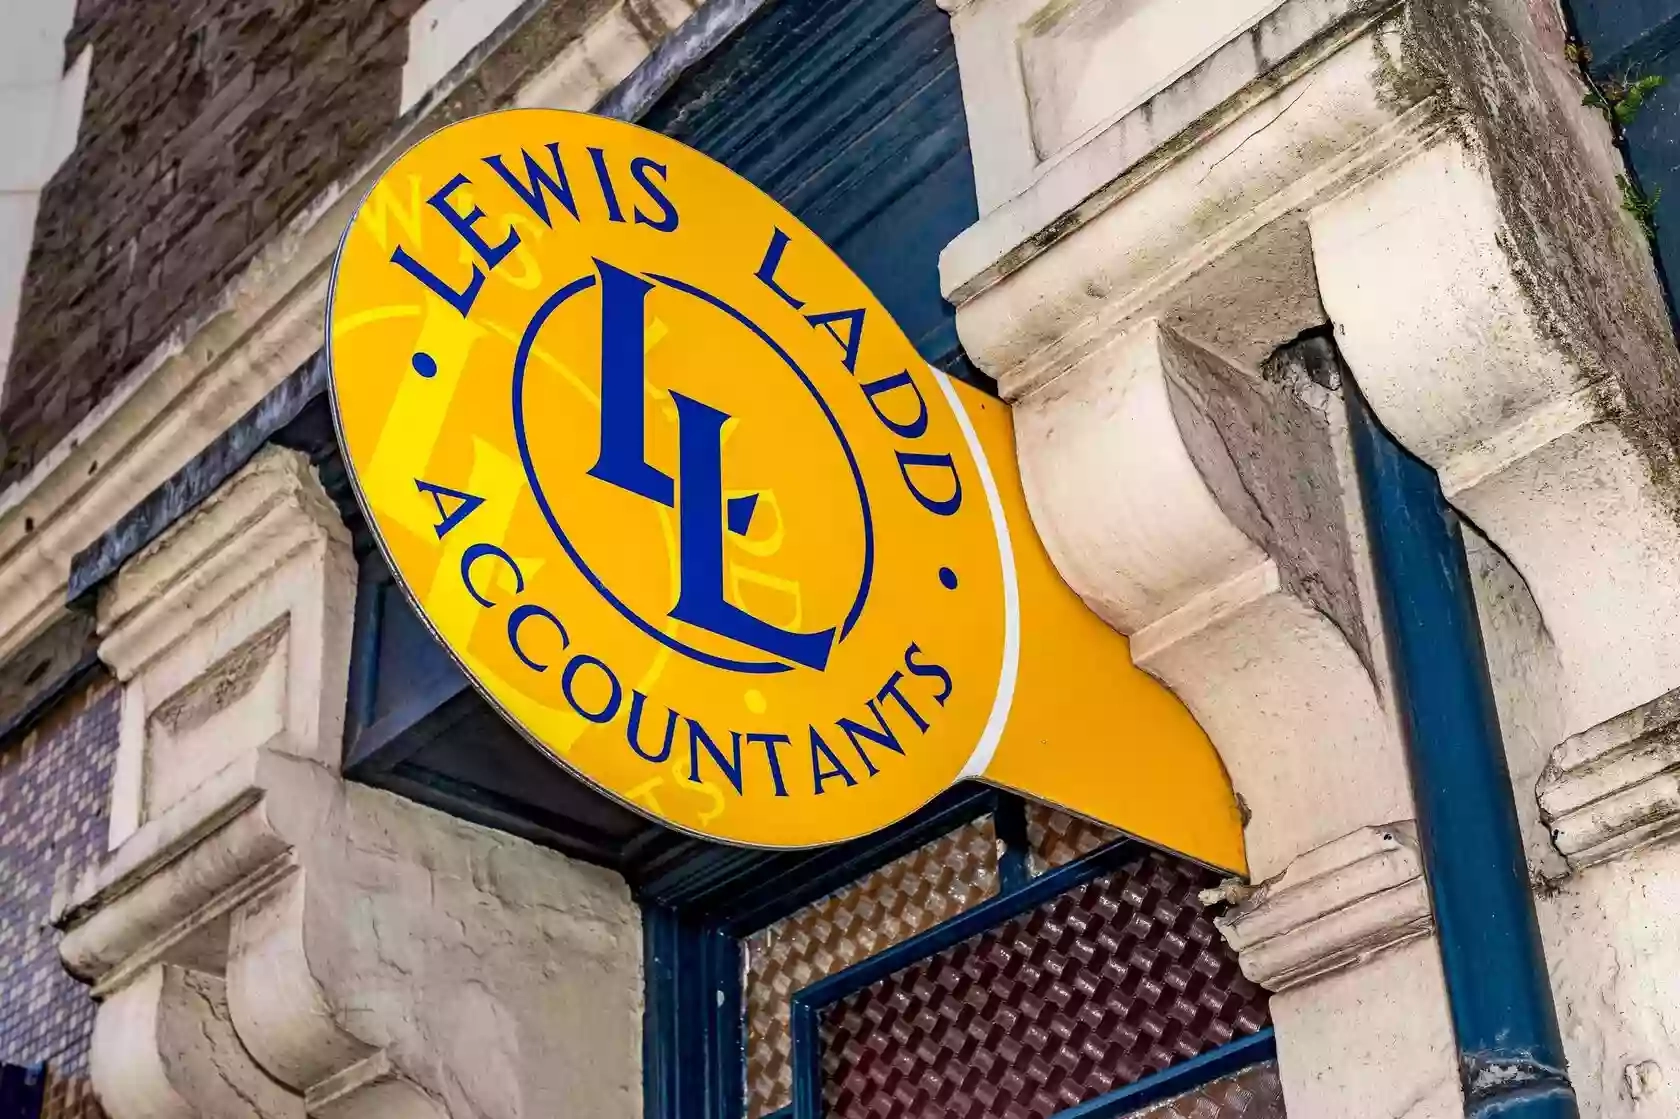 Lewis Ladd & Co